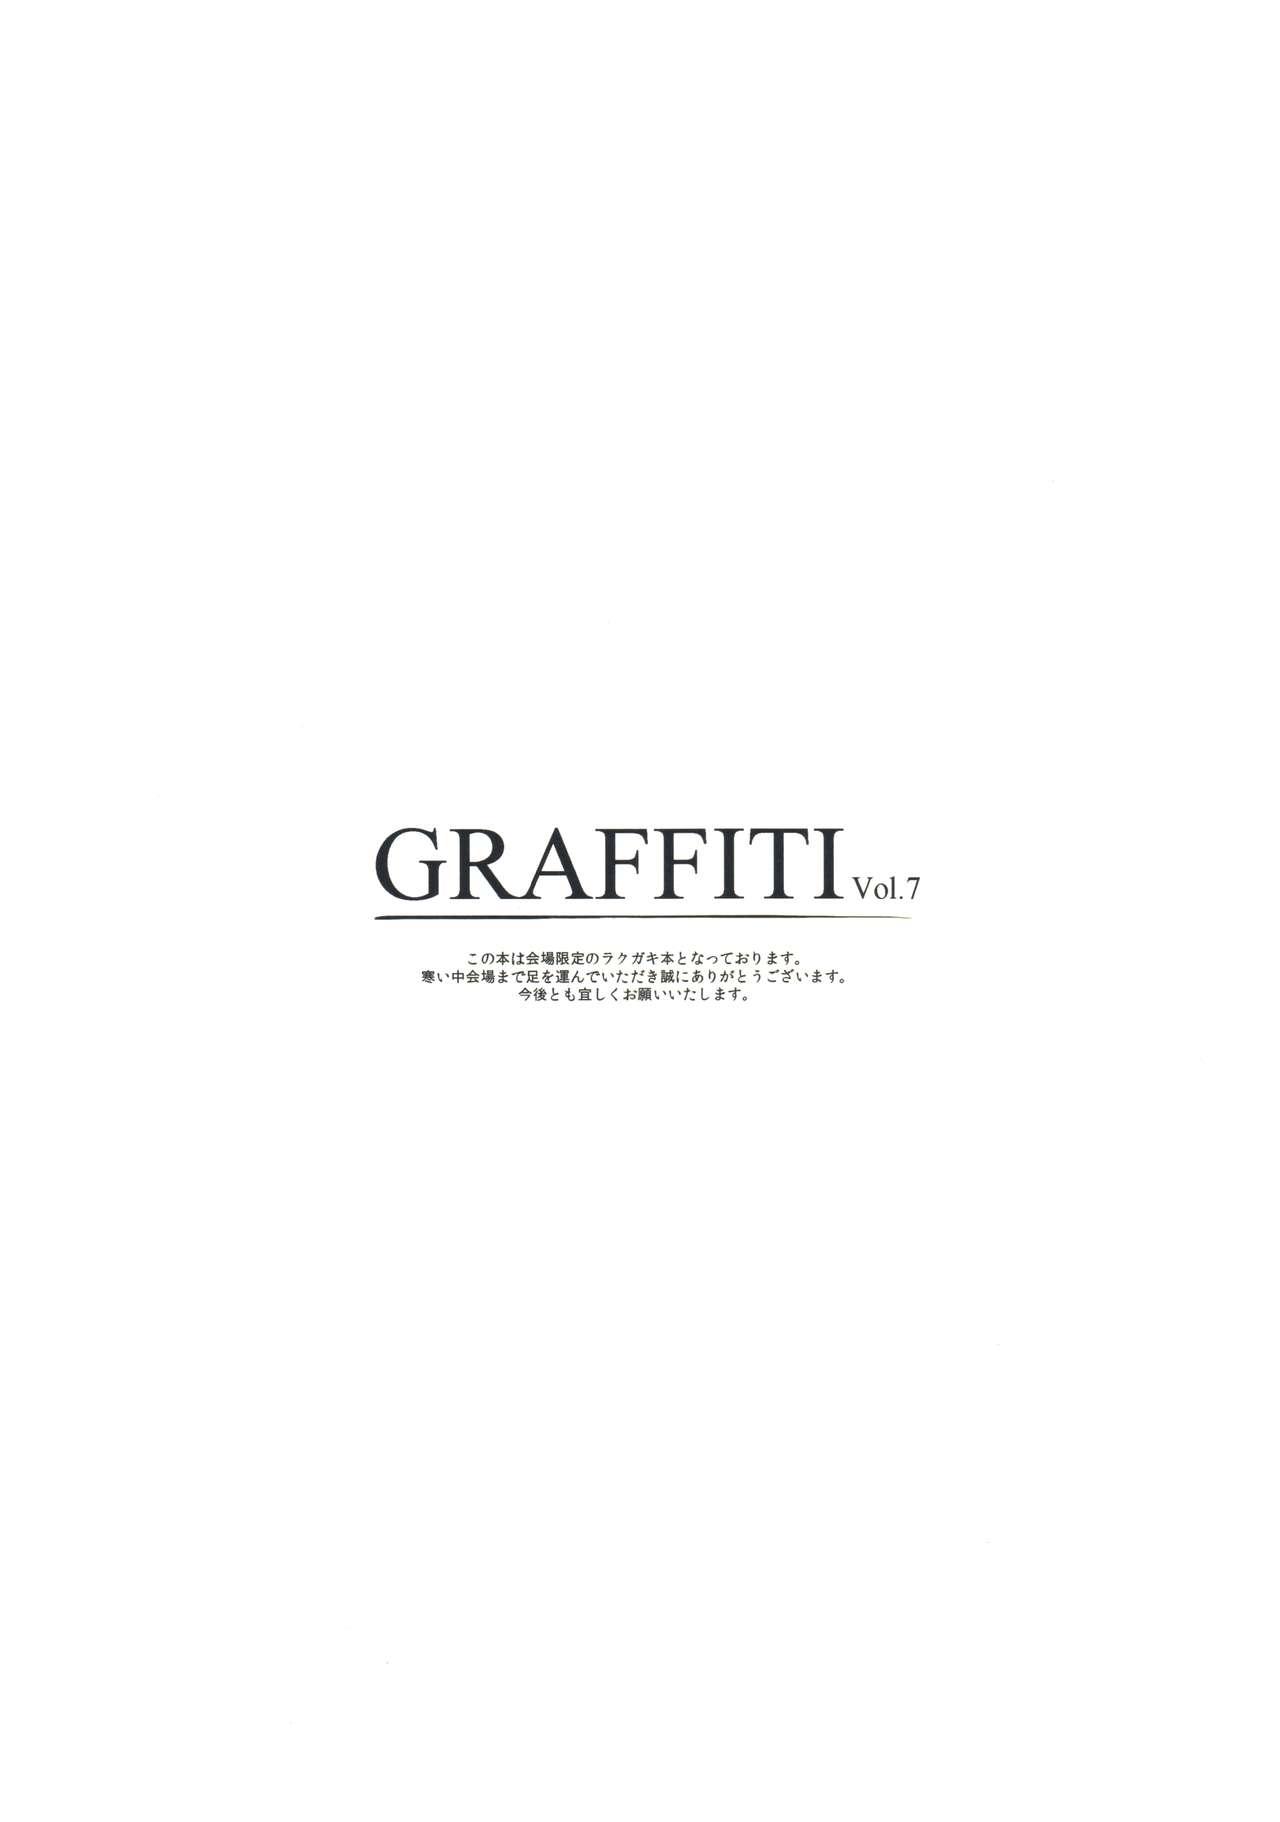 GRAFFITI Vol. 7 1